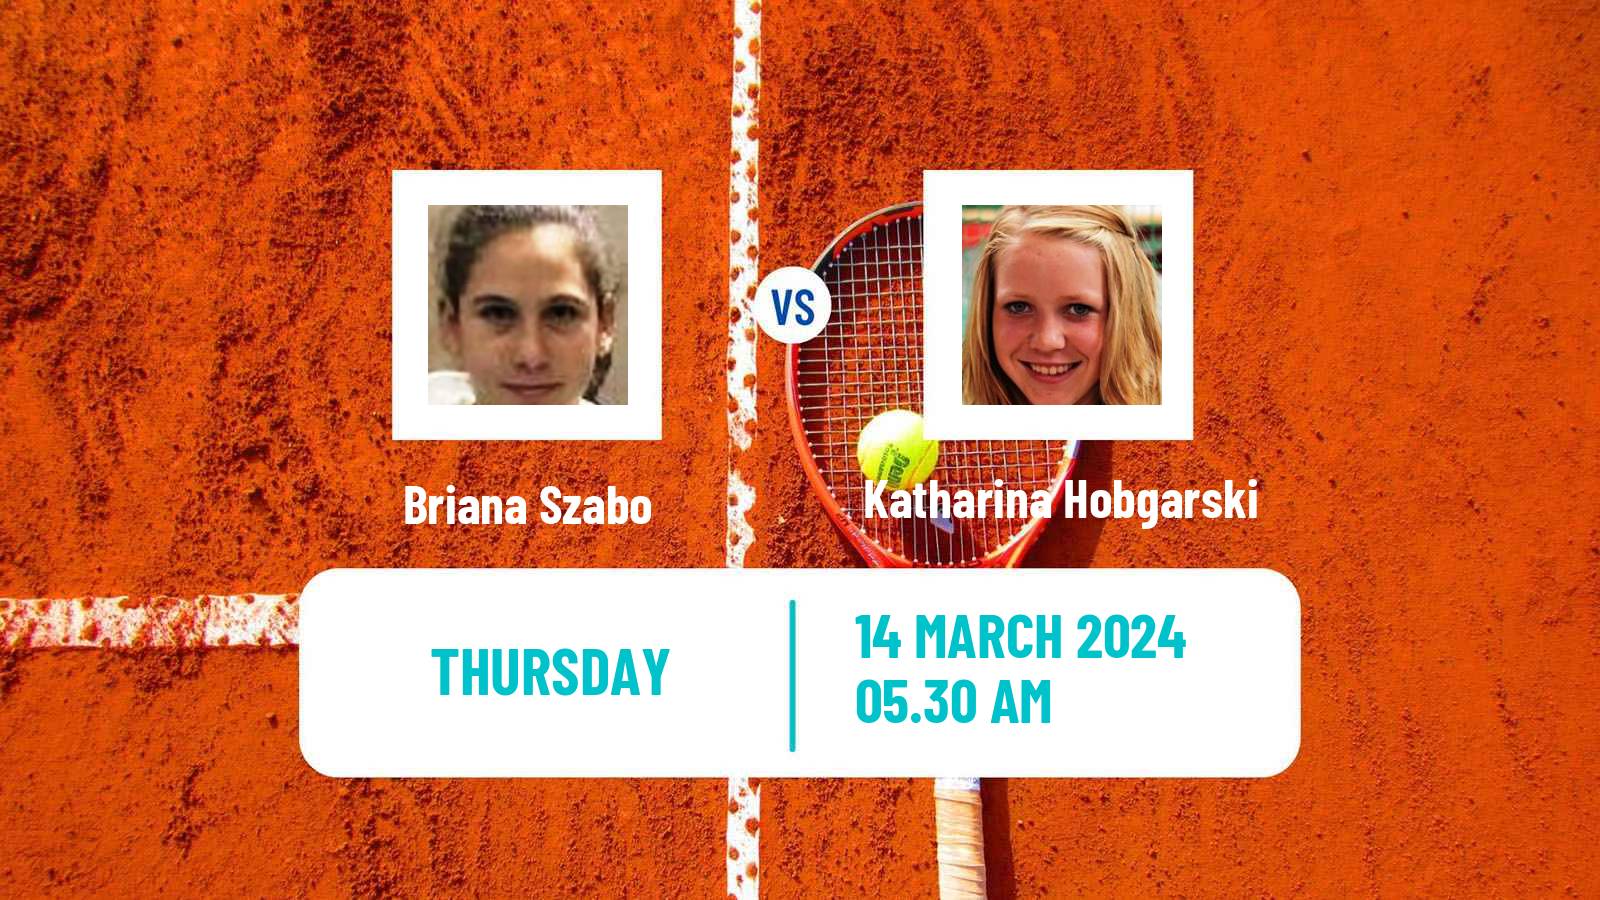 Tennis ITF W15 Heraklion 2 Women Briana Szabo - Katharina Hobgarski